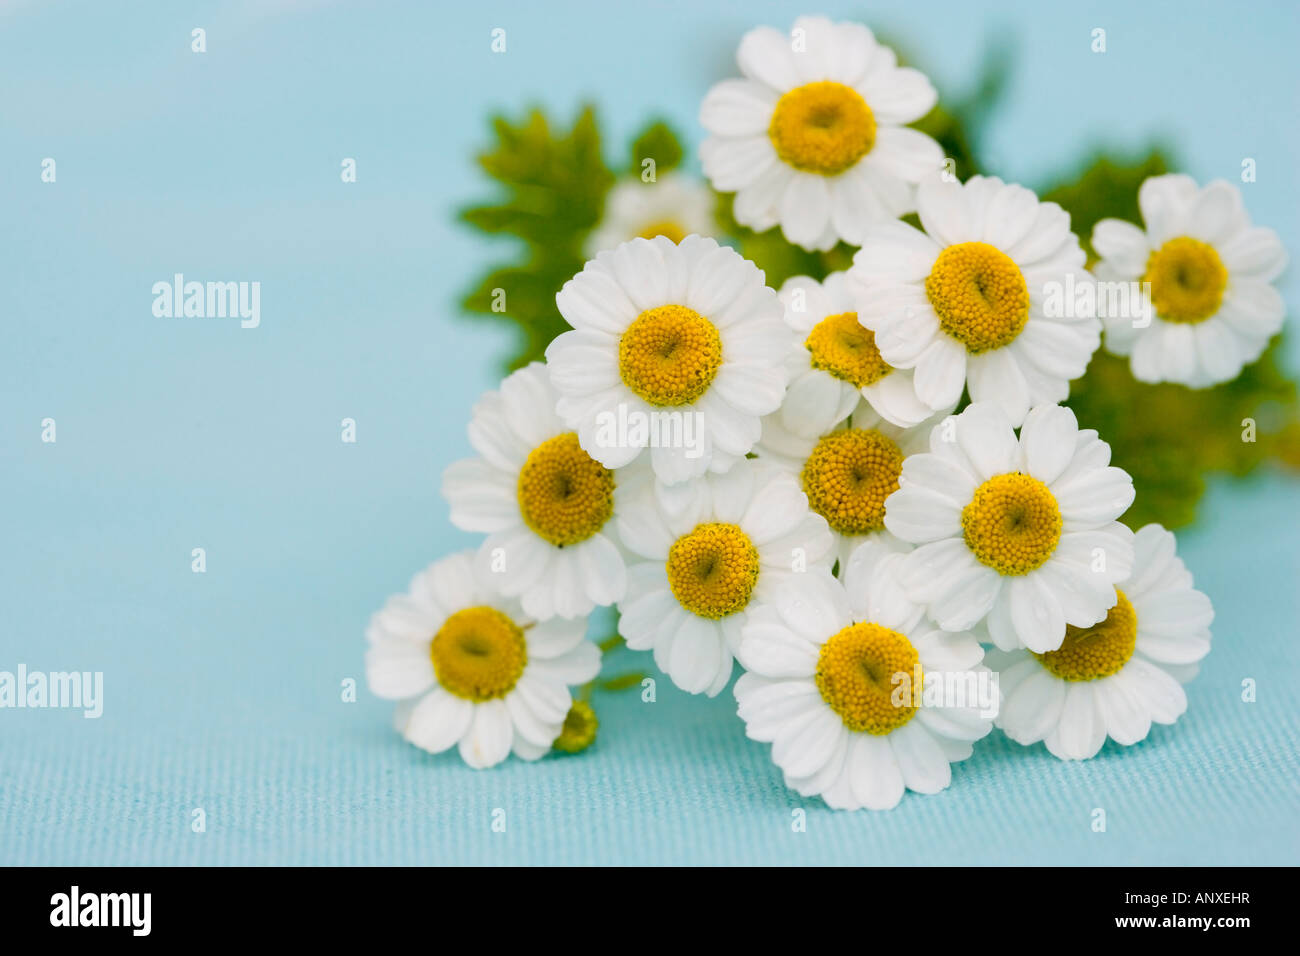 Gänseblümchen - Mutterkraut Blumen gegen ein blaues Leinen Backddrop erschossen Stockfoto